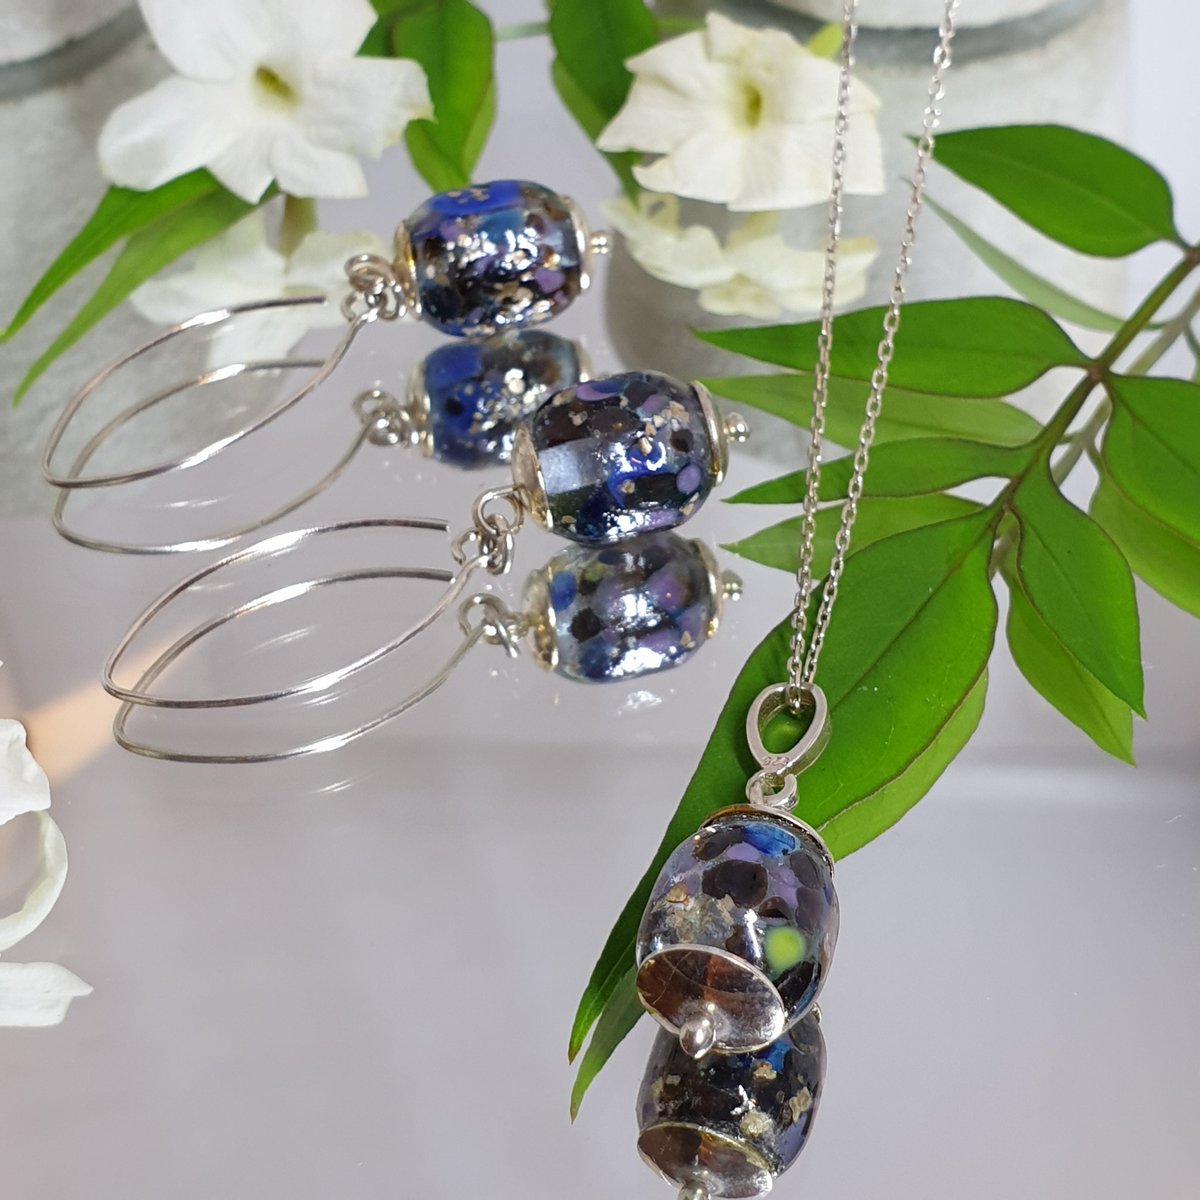 Murano Glass Earrings and Necklace, Sterling Silver
#ChristmasIsComing #christmas #smallbiz #shopsmall #smallbusiness #fashion #earlybiz #giftsforher #beauty #uk #crafts #handmadegifts #womangift #etsy #etsyshop #shopping #wednesdaythought

etsy.com/uk/listing/709…